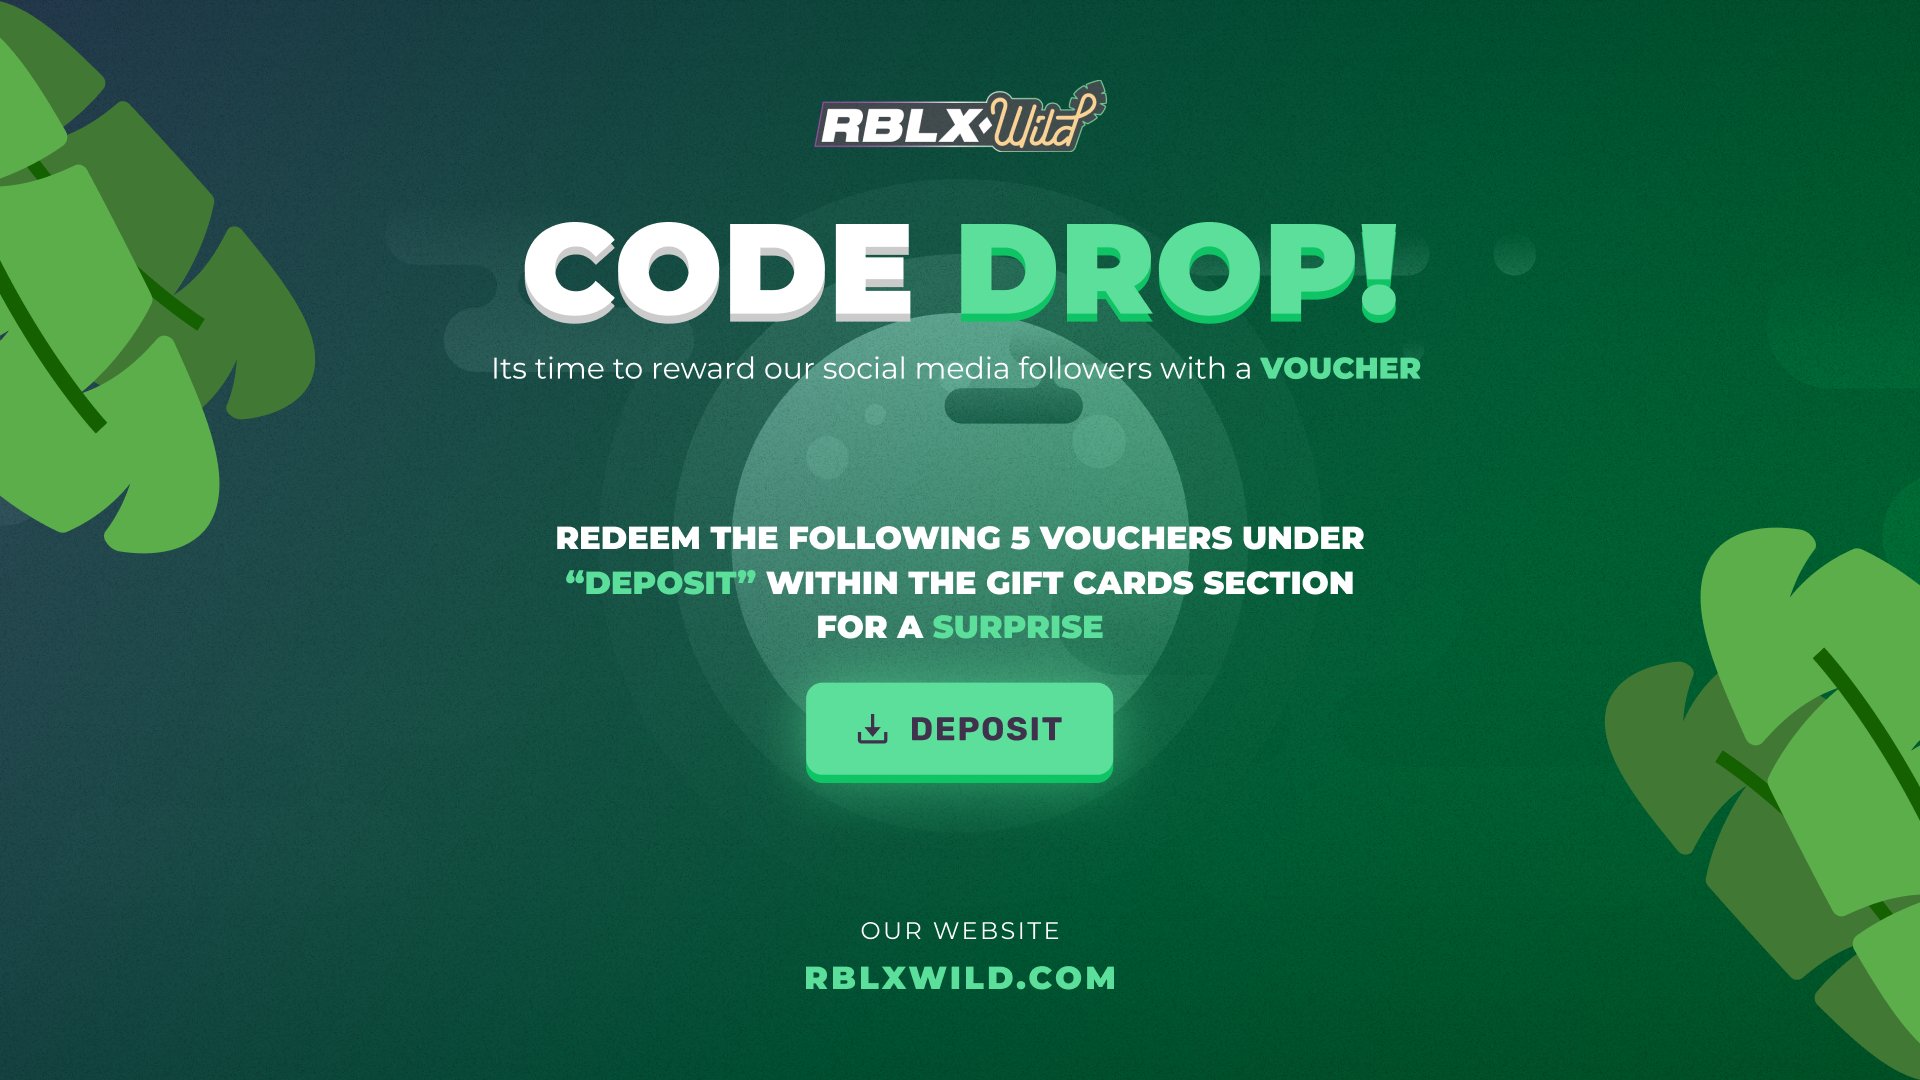 rblxwildcom - 🔥ROBUX GIVEAWAY🔥 3M BALANCE RBLXWILD PROMOCODES GIFT CARDS  Sorhex !discord